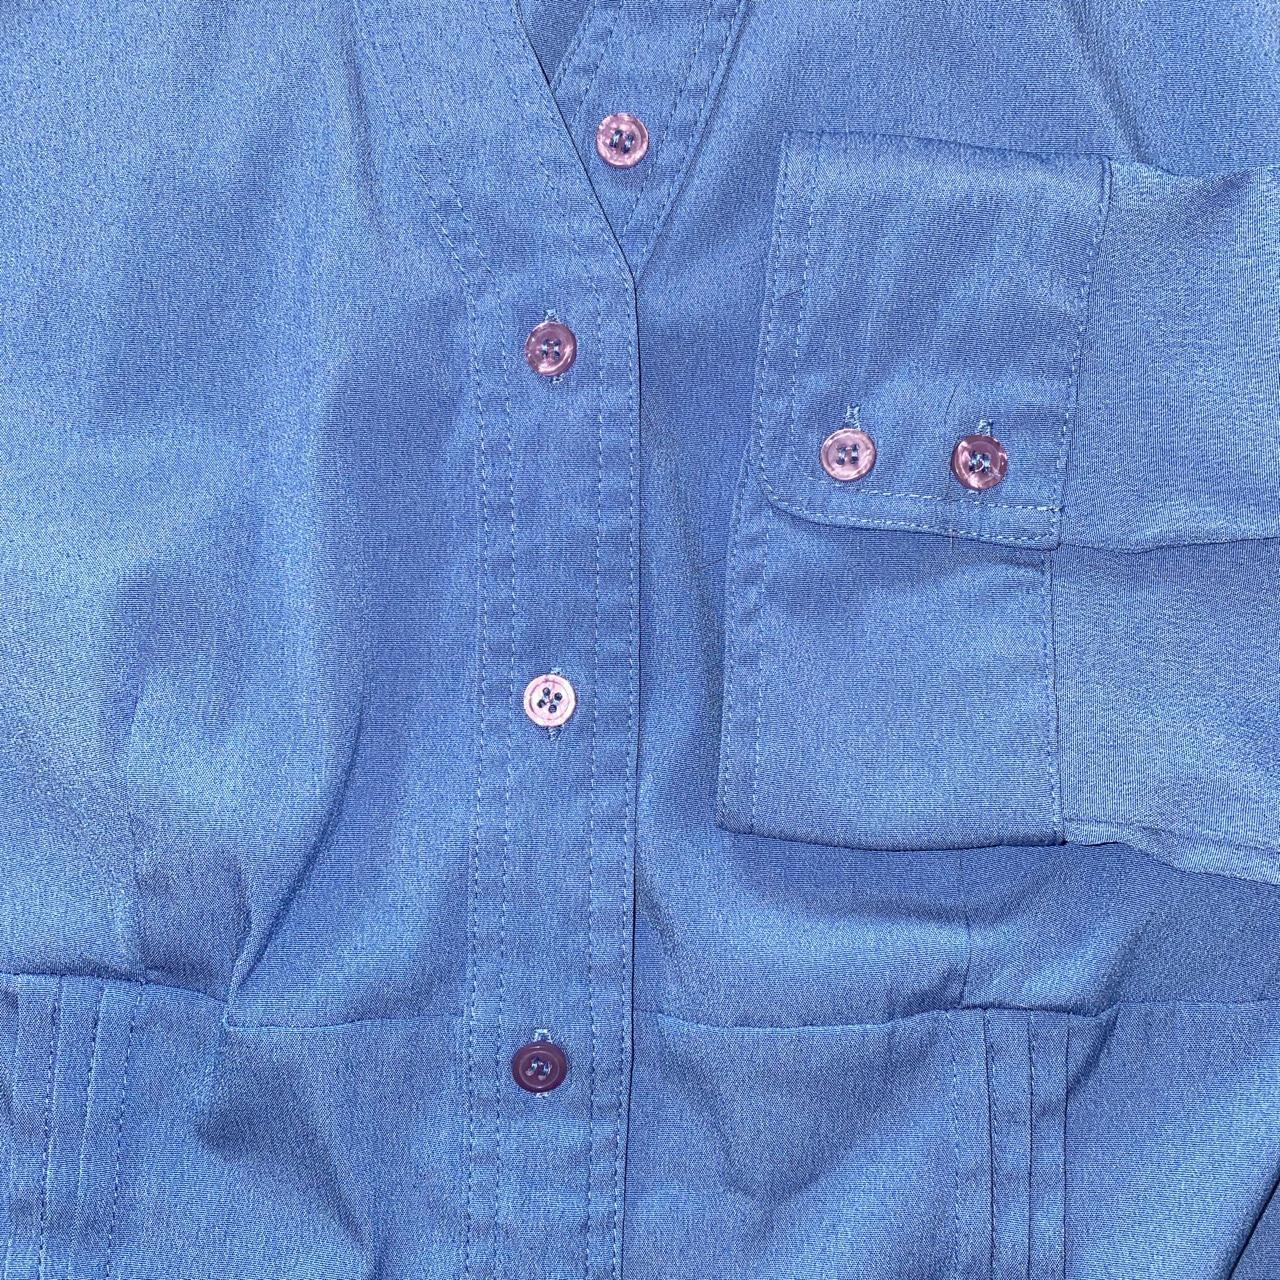 Product Image 3 - Fred David shirt top blouse.